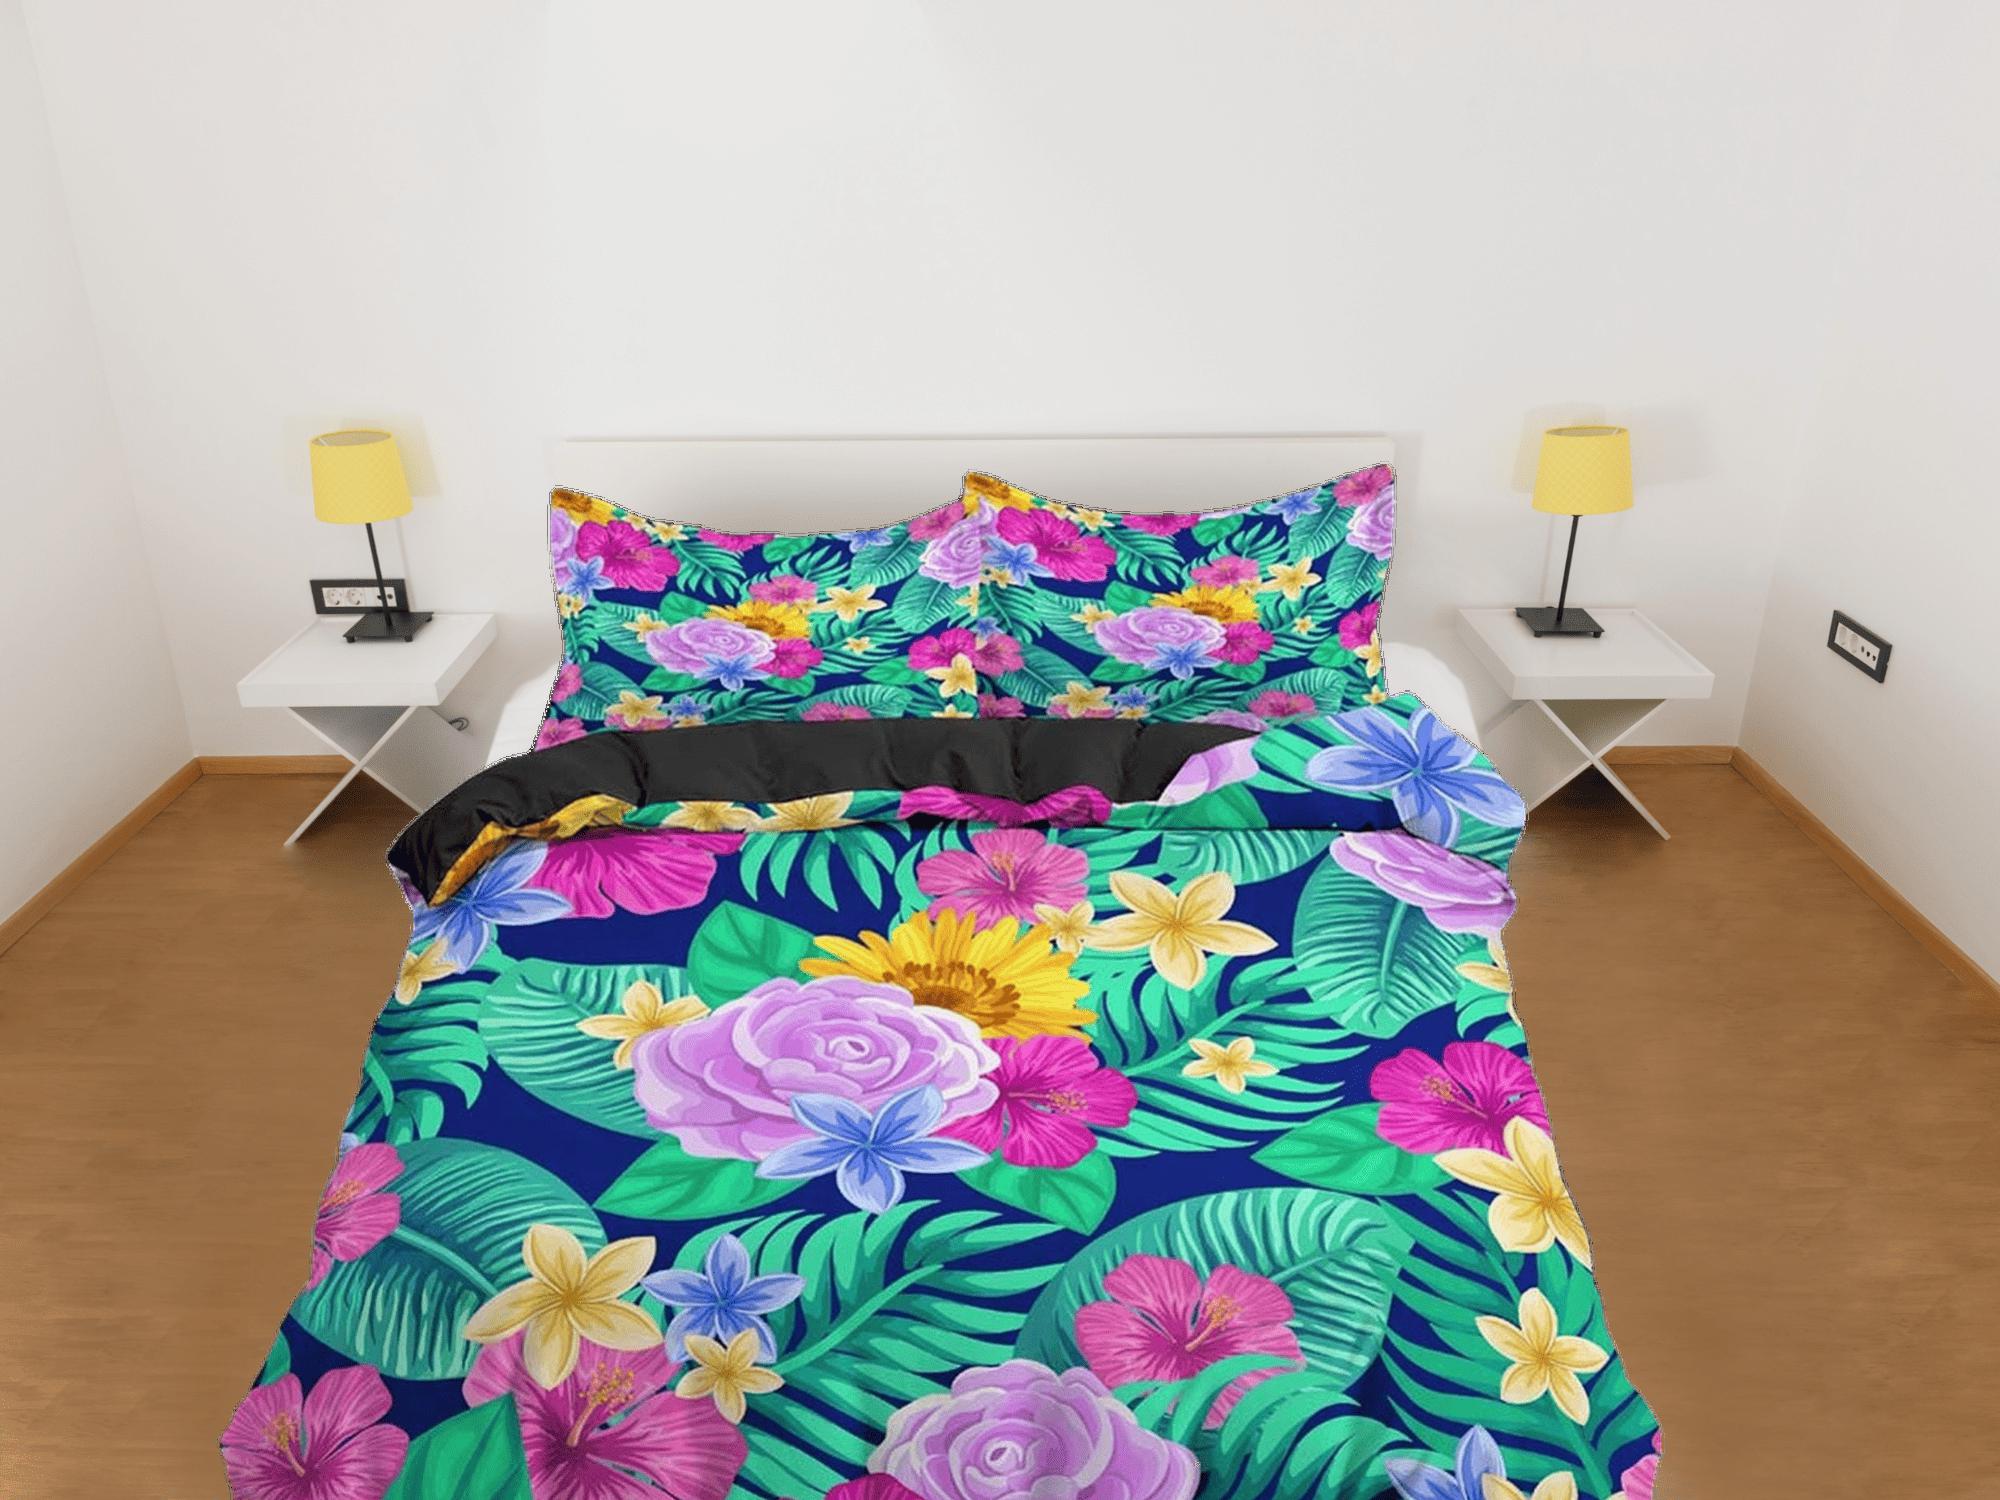 daintyduvet Colorful floral bedding, tropical duvet cover queen, king, boho duvet, designer bedding, aesthetic bedding, maximalist full size bedding